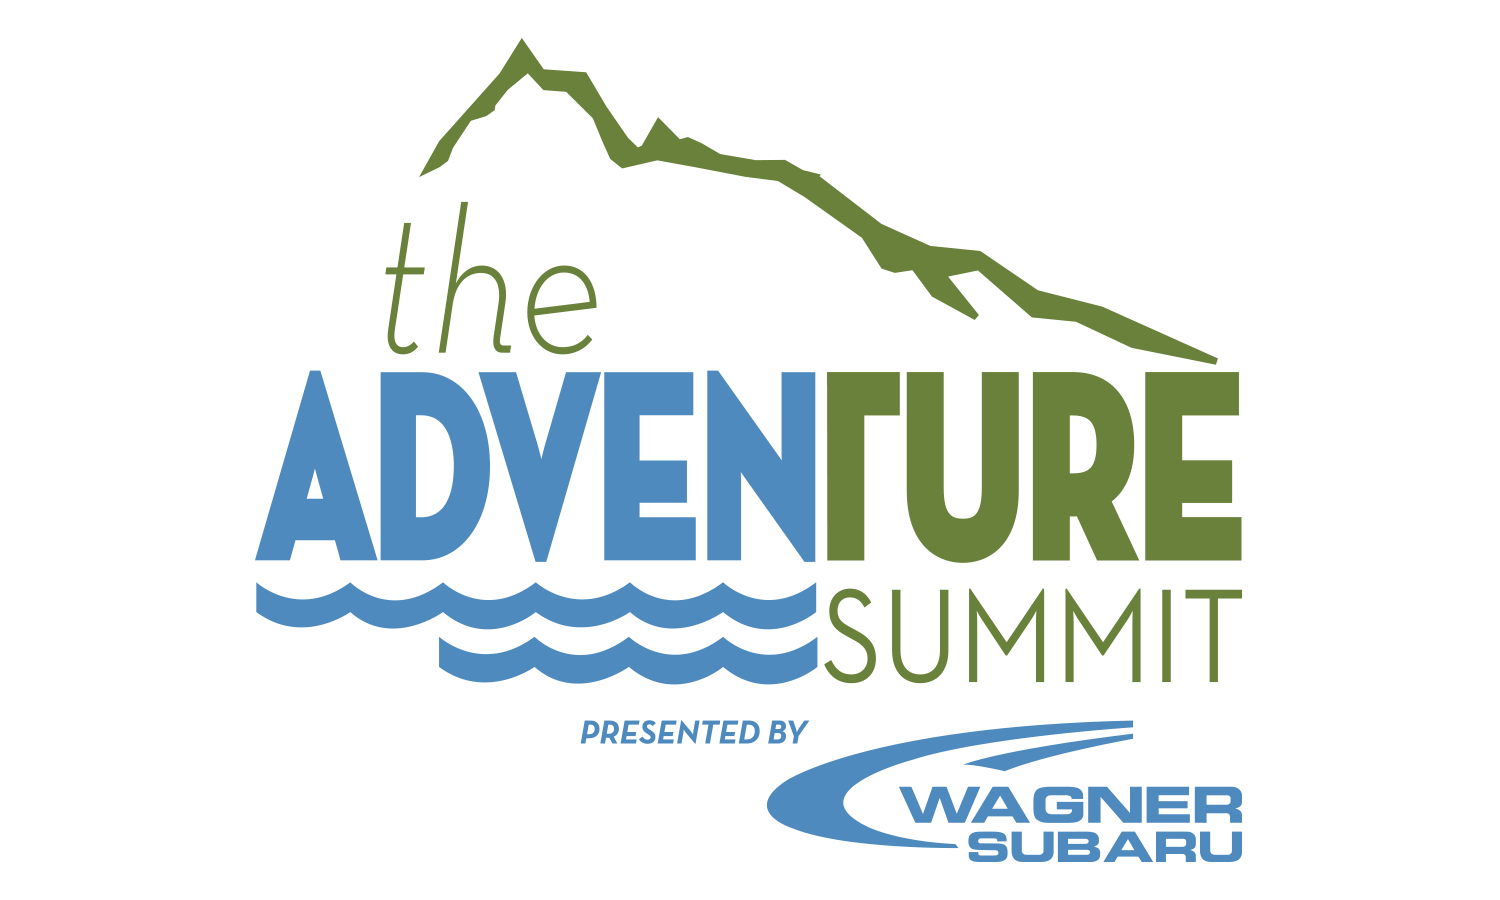 The Adventure Summit logo